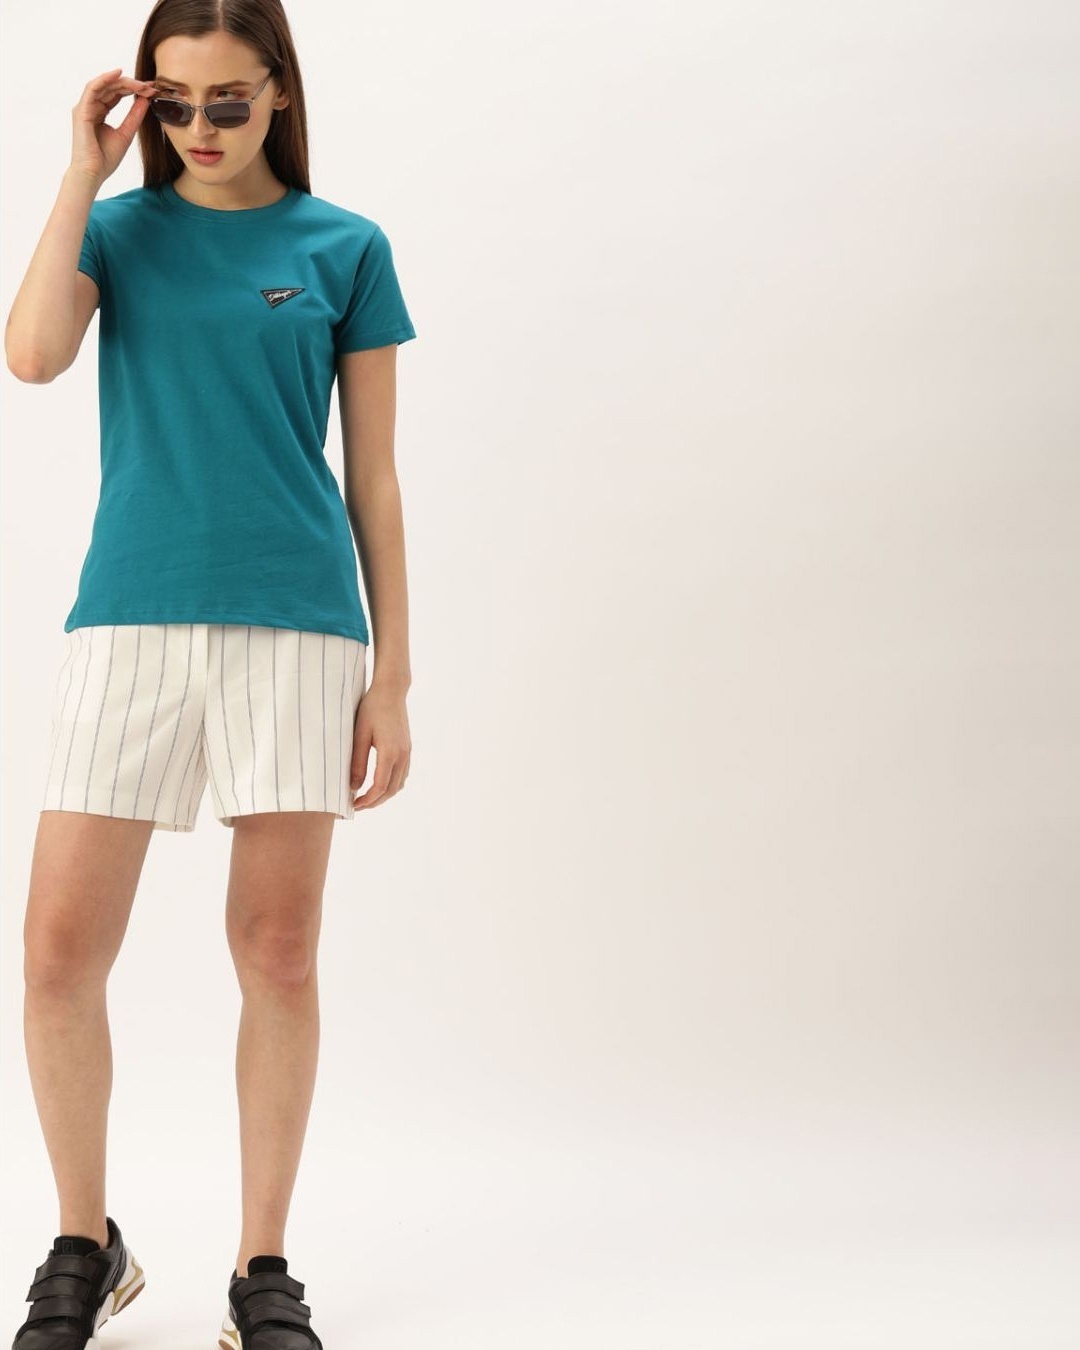 Shop Women's Blue Solid T-shirt